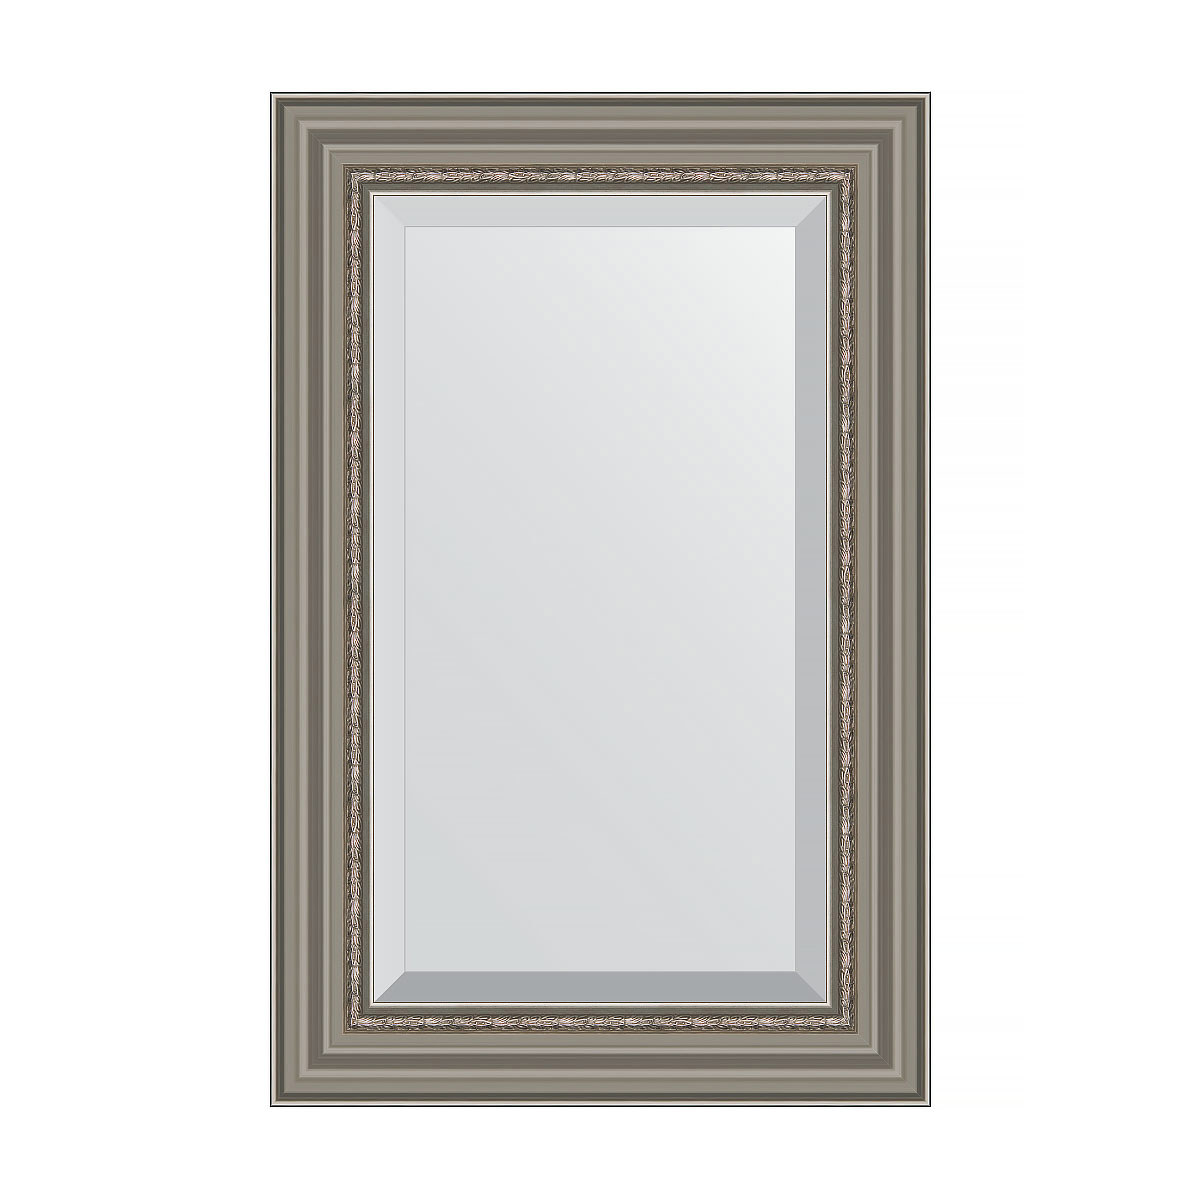 90311673 Зеркало с фацетом в багетной раме римское серебро 88 мм 56х86 см BY 1237 EXCLUSIVE STLM-0178687 EVOFORM